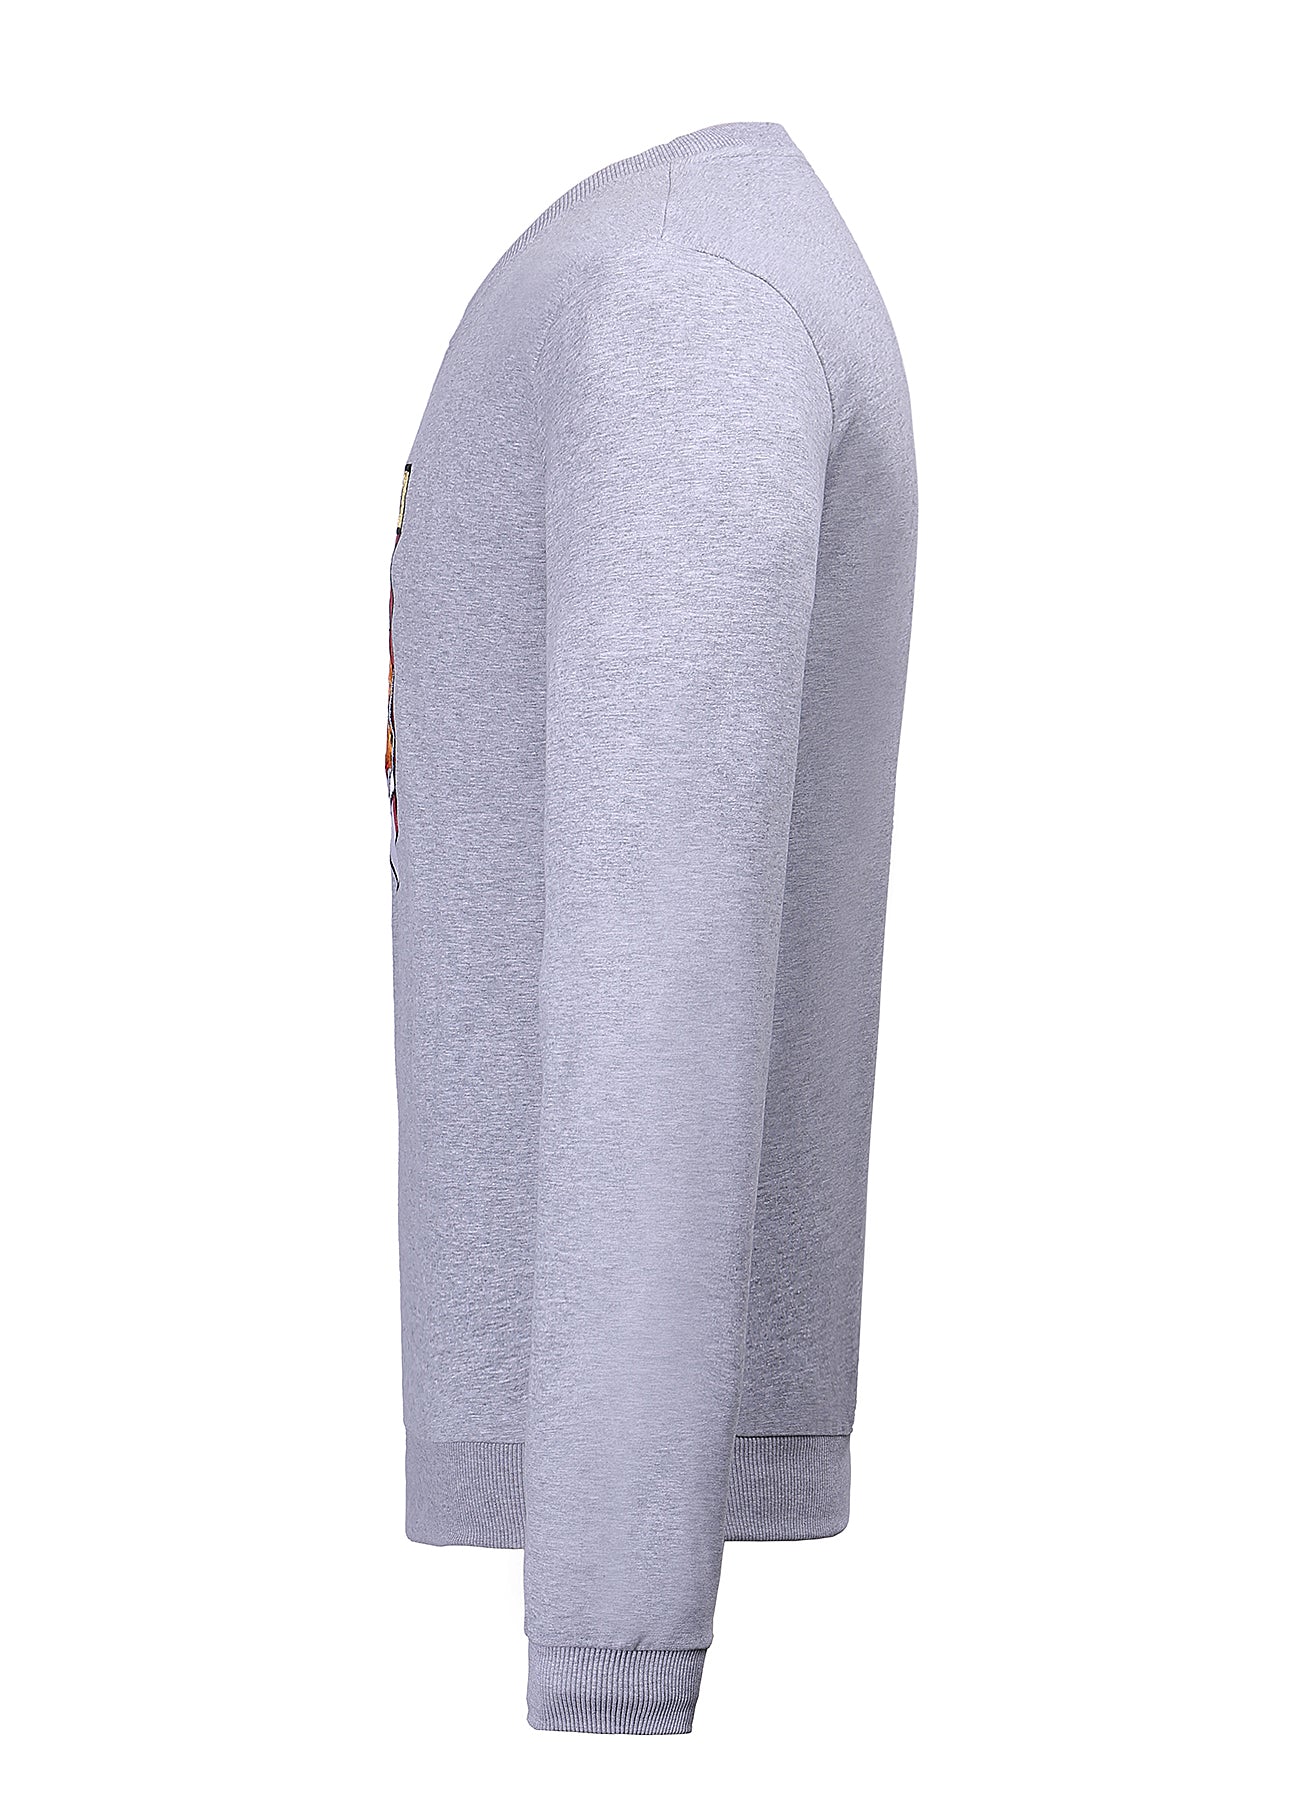 Embroidery Light Grey Cotton Sweatshirt With Big Logo